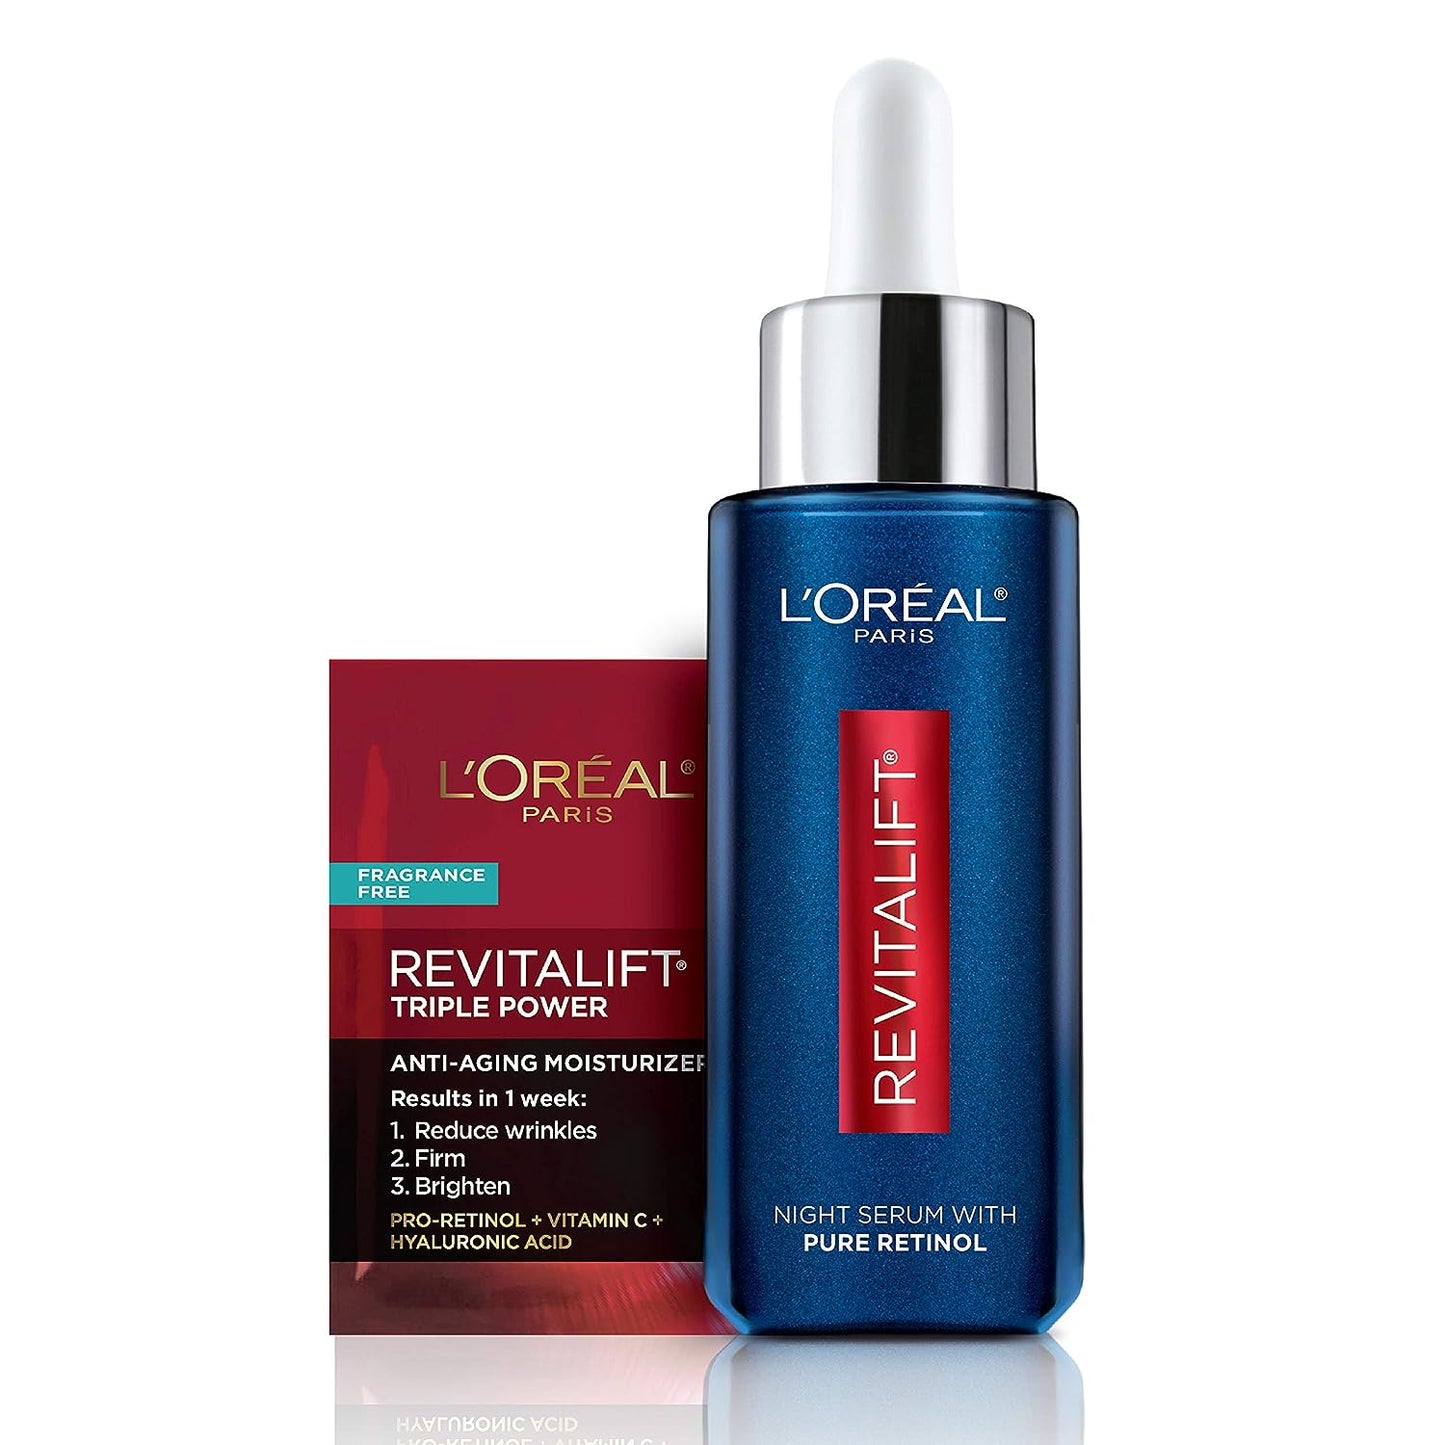 L'Oréal Revitalift Derm Intensives Night Serum with 0.3% Pure Retinol